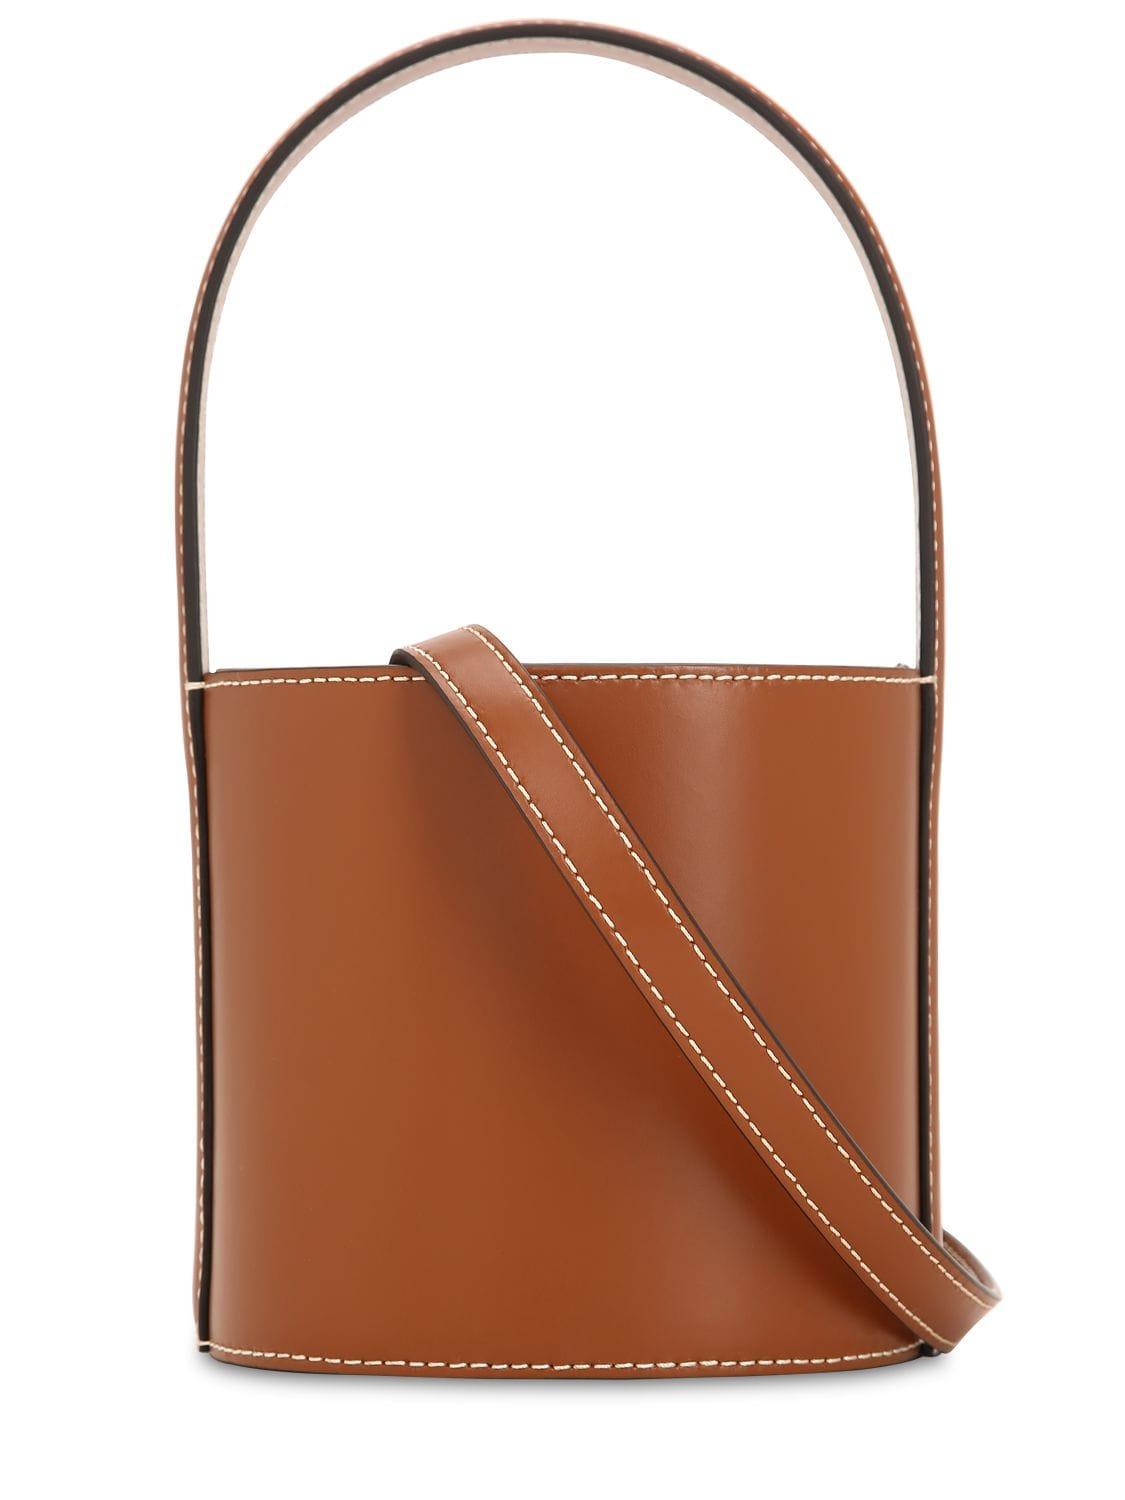 STAUD Mini Bissett Leather Bucket Bag in Brown - Lyst